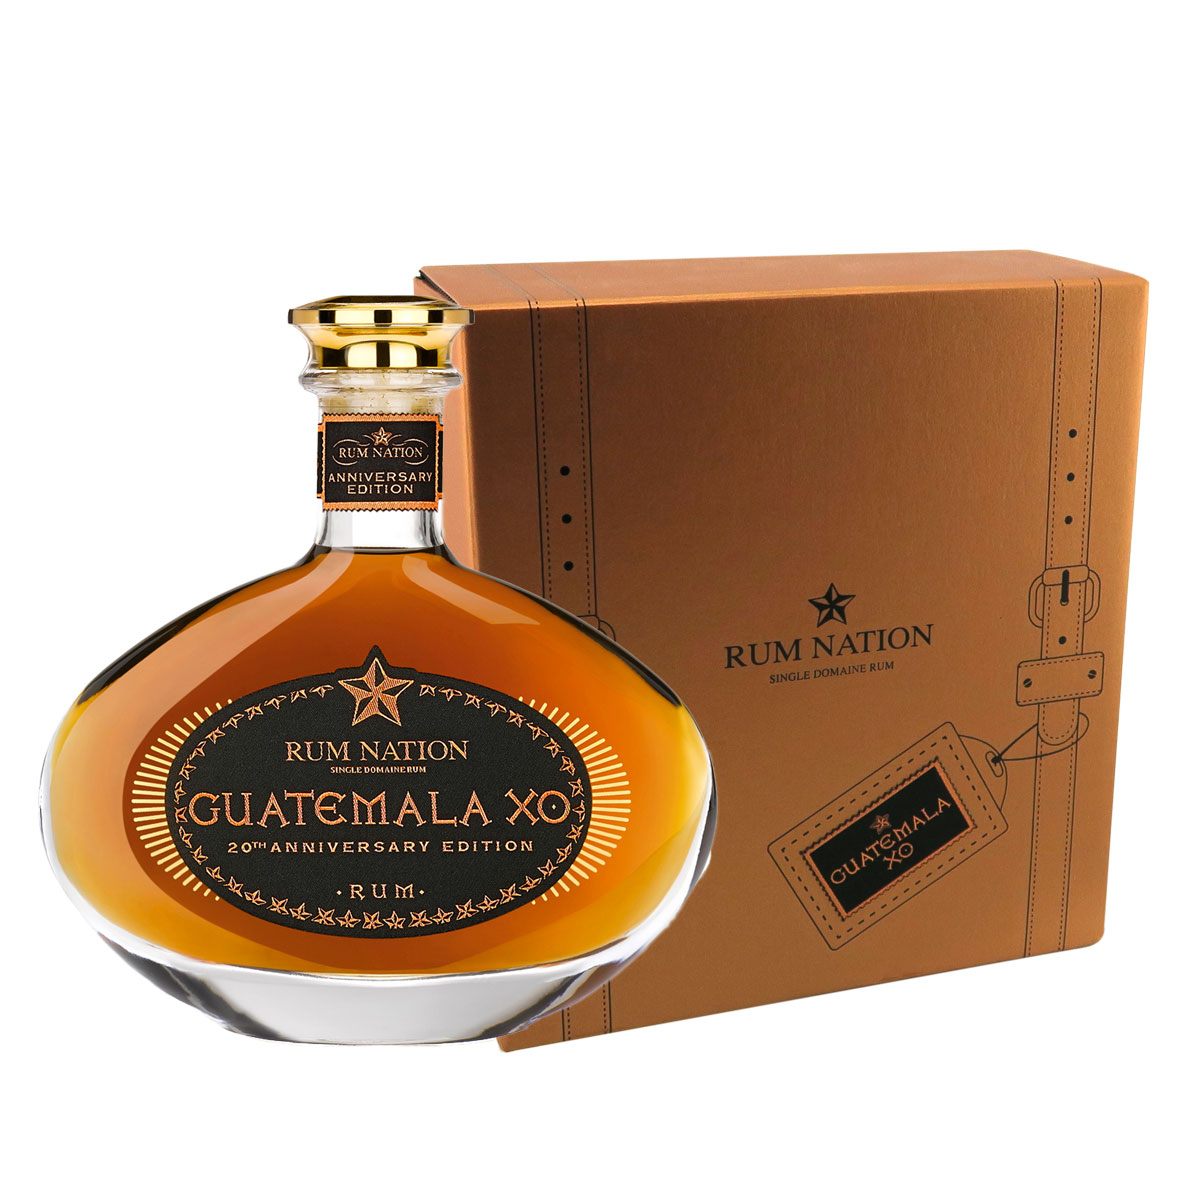 Rum Nation Guatemala XO 20th Anniversary Edition, 40% Vol. 0,7 ltr. Geschenkkarton